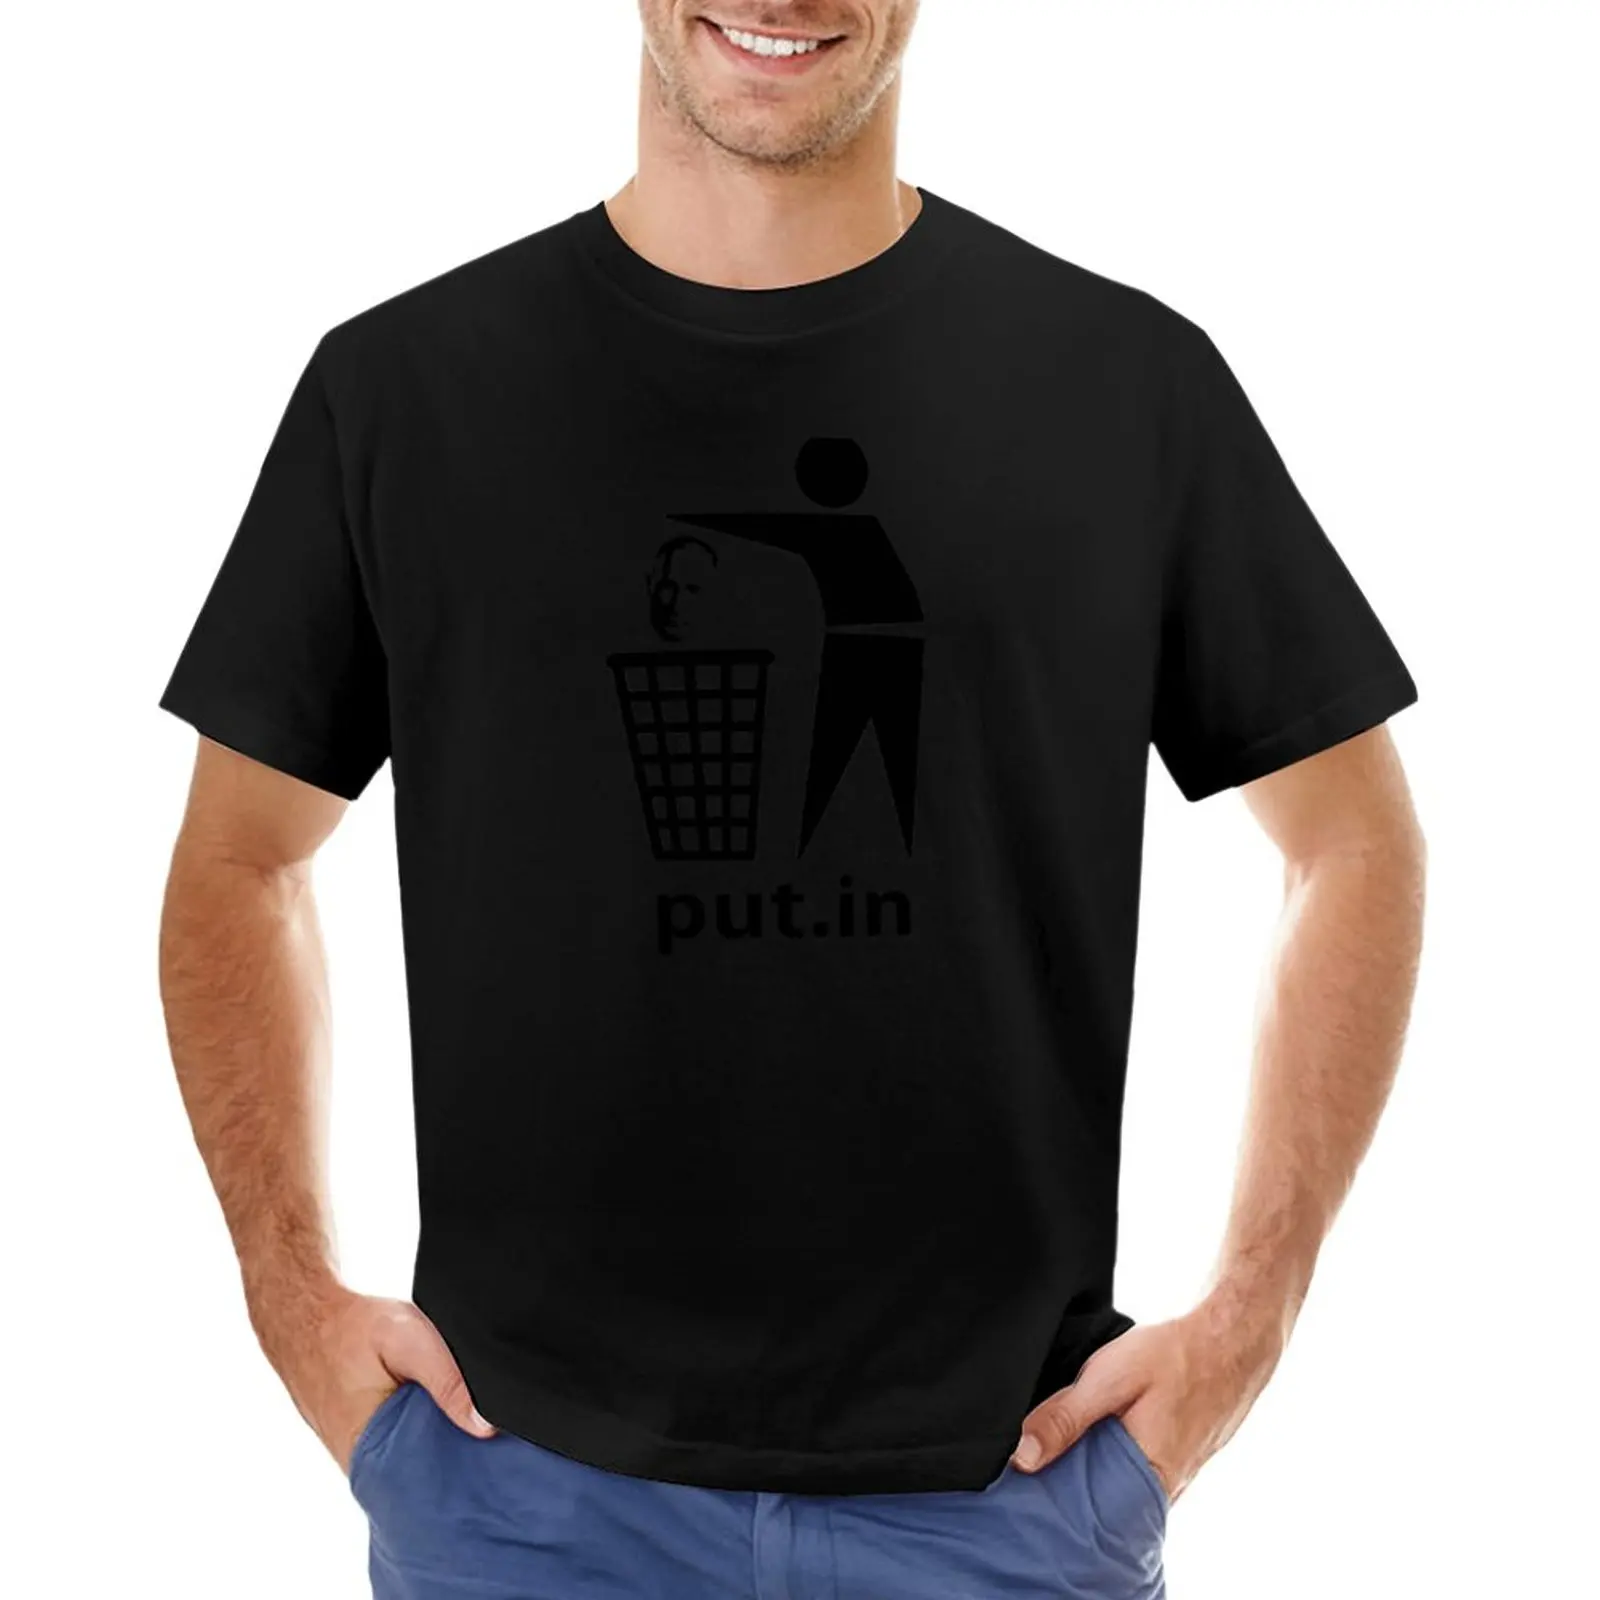 Put.In Trash T-Shirt custom t shirts design your own custom t shirts tops cute tops mens graphic t-shirts pack